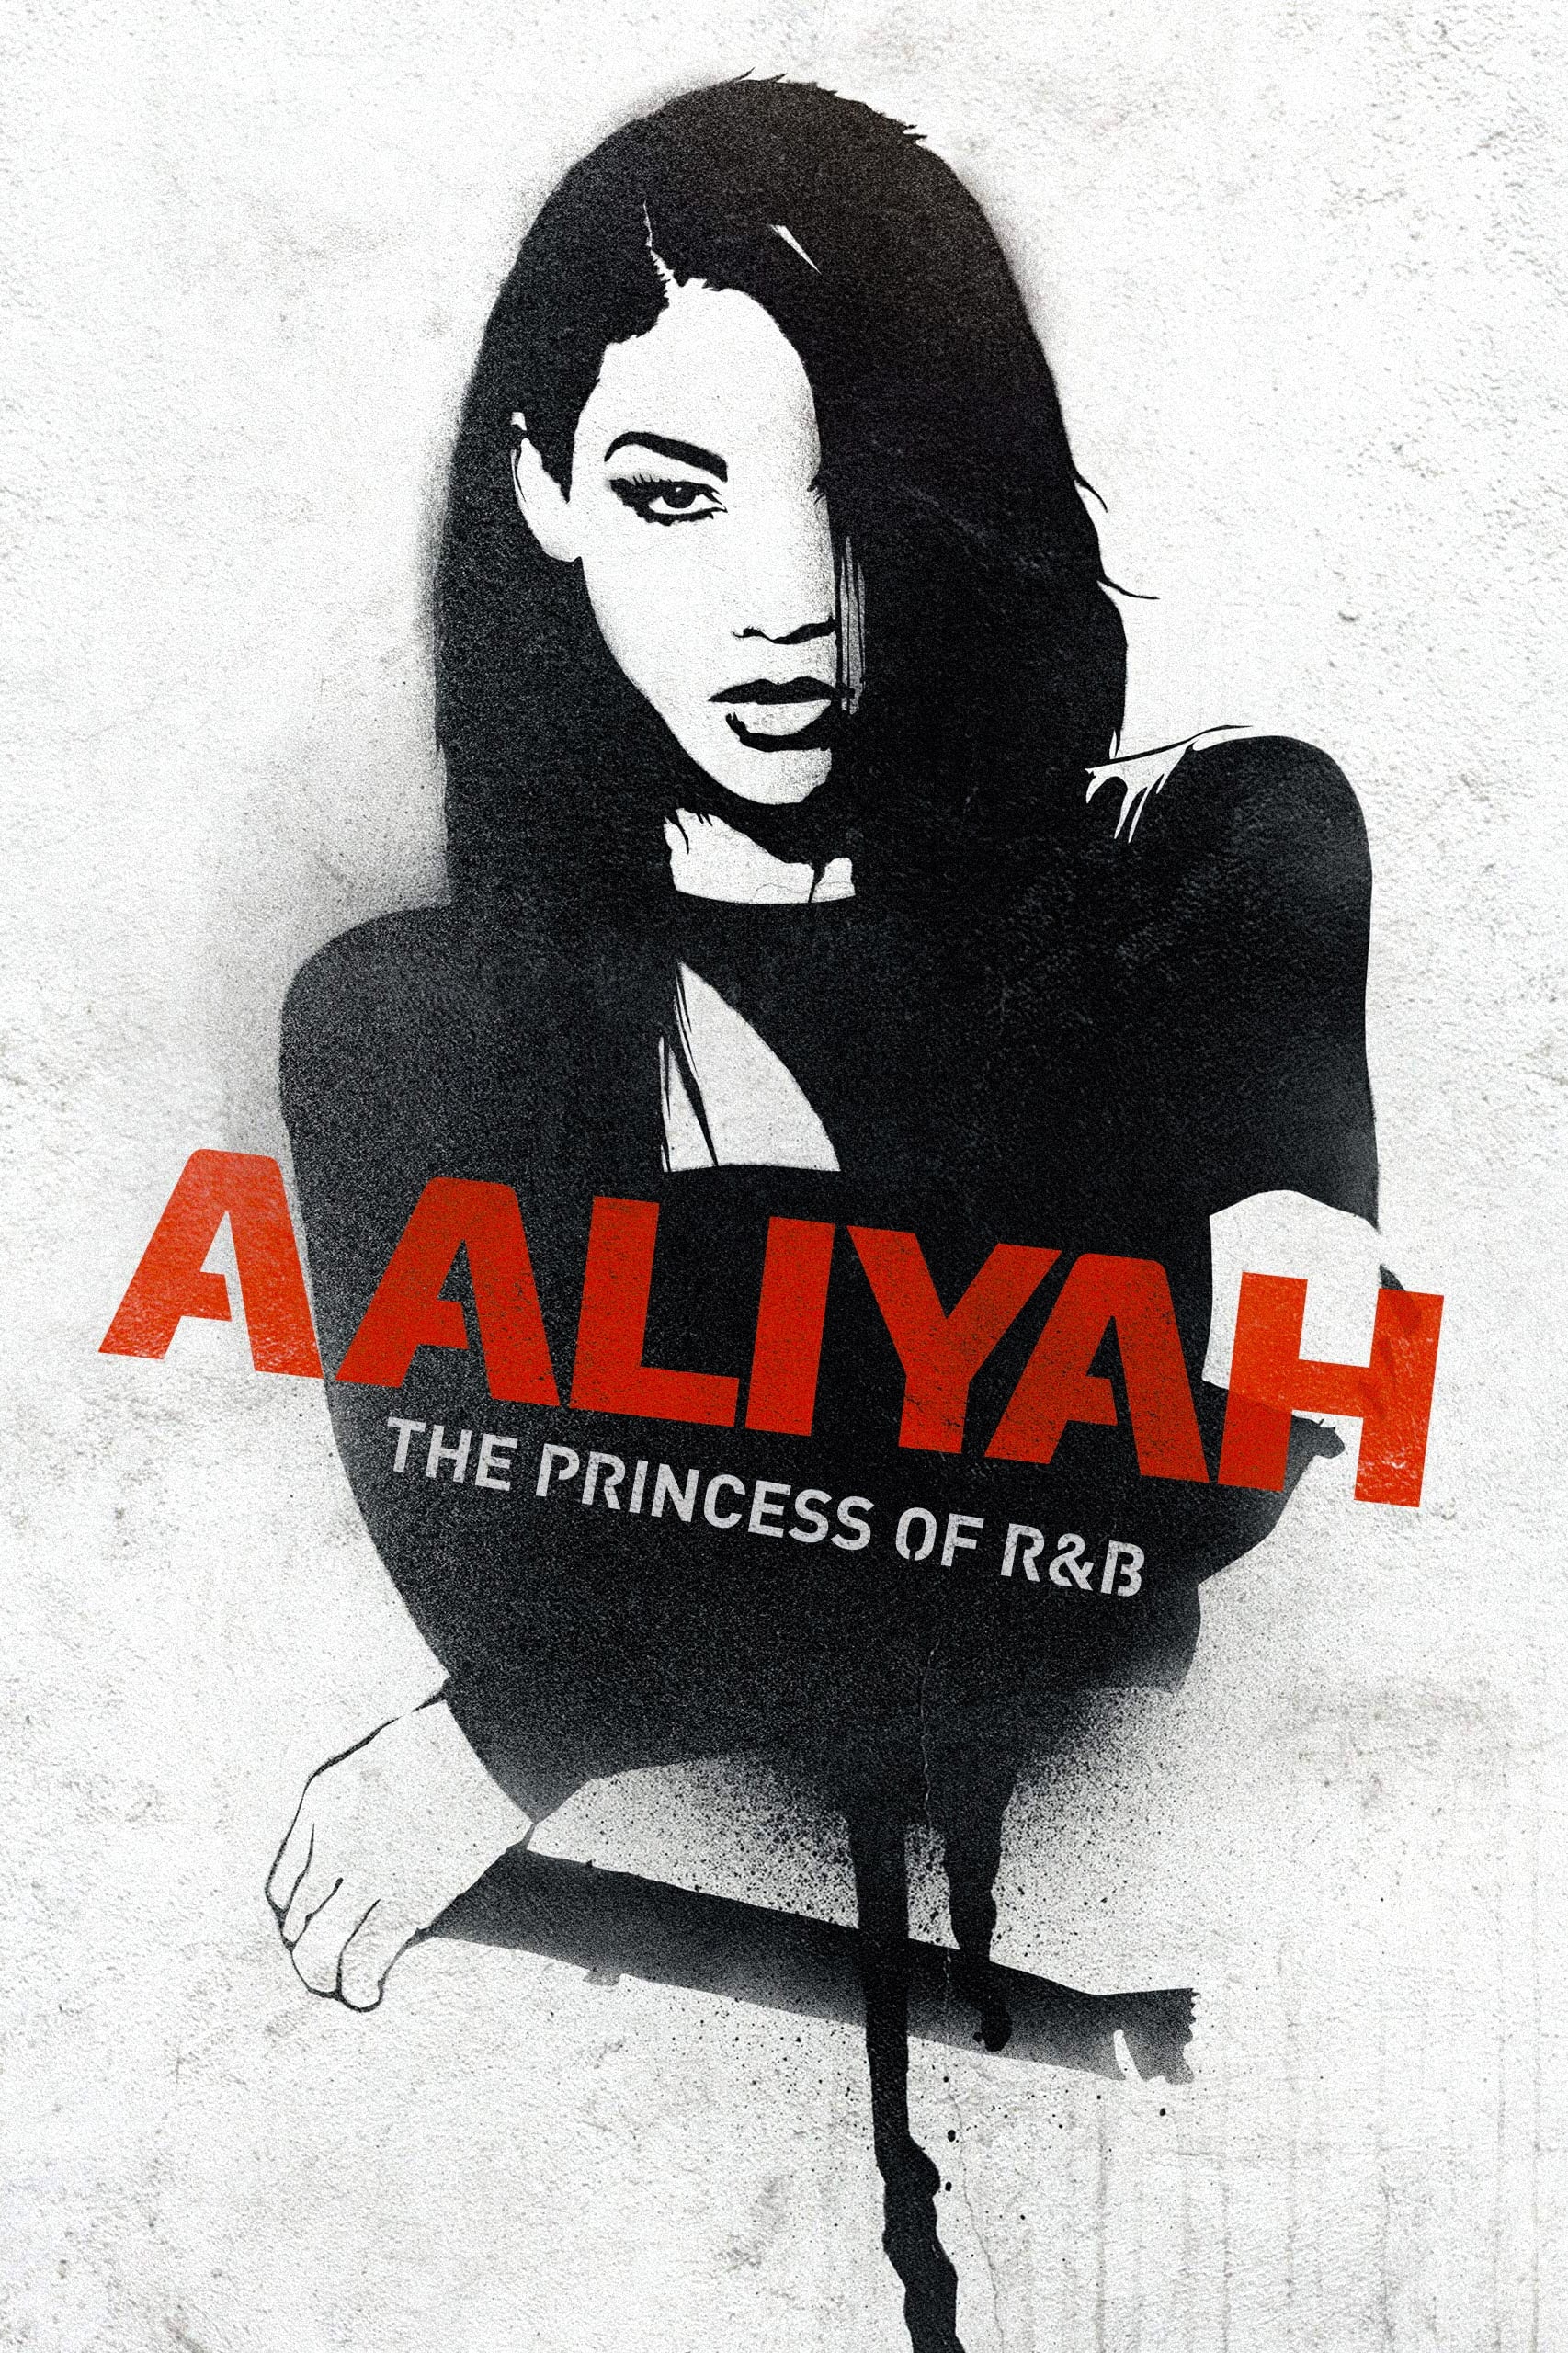 Aaliyah: R&B Prensesi